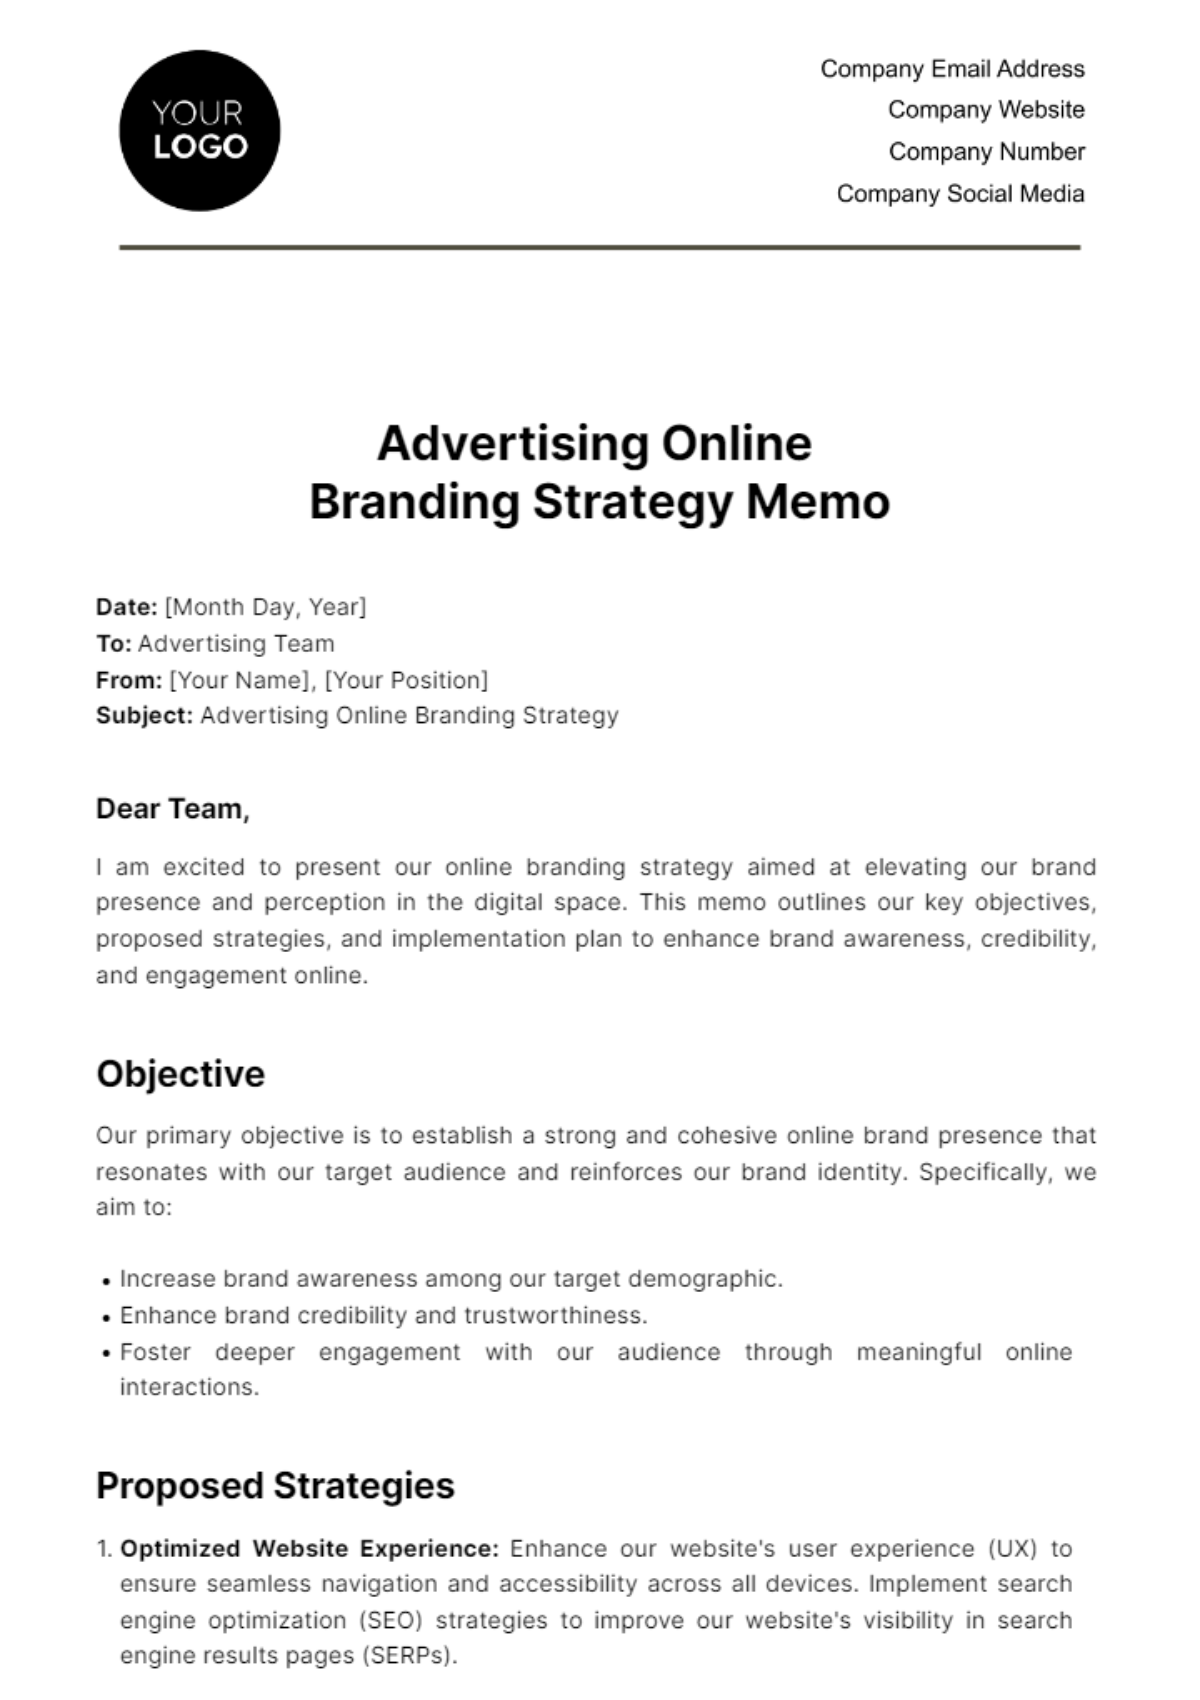 Free Advertising Online Branding Strategy Memo Template